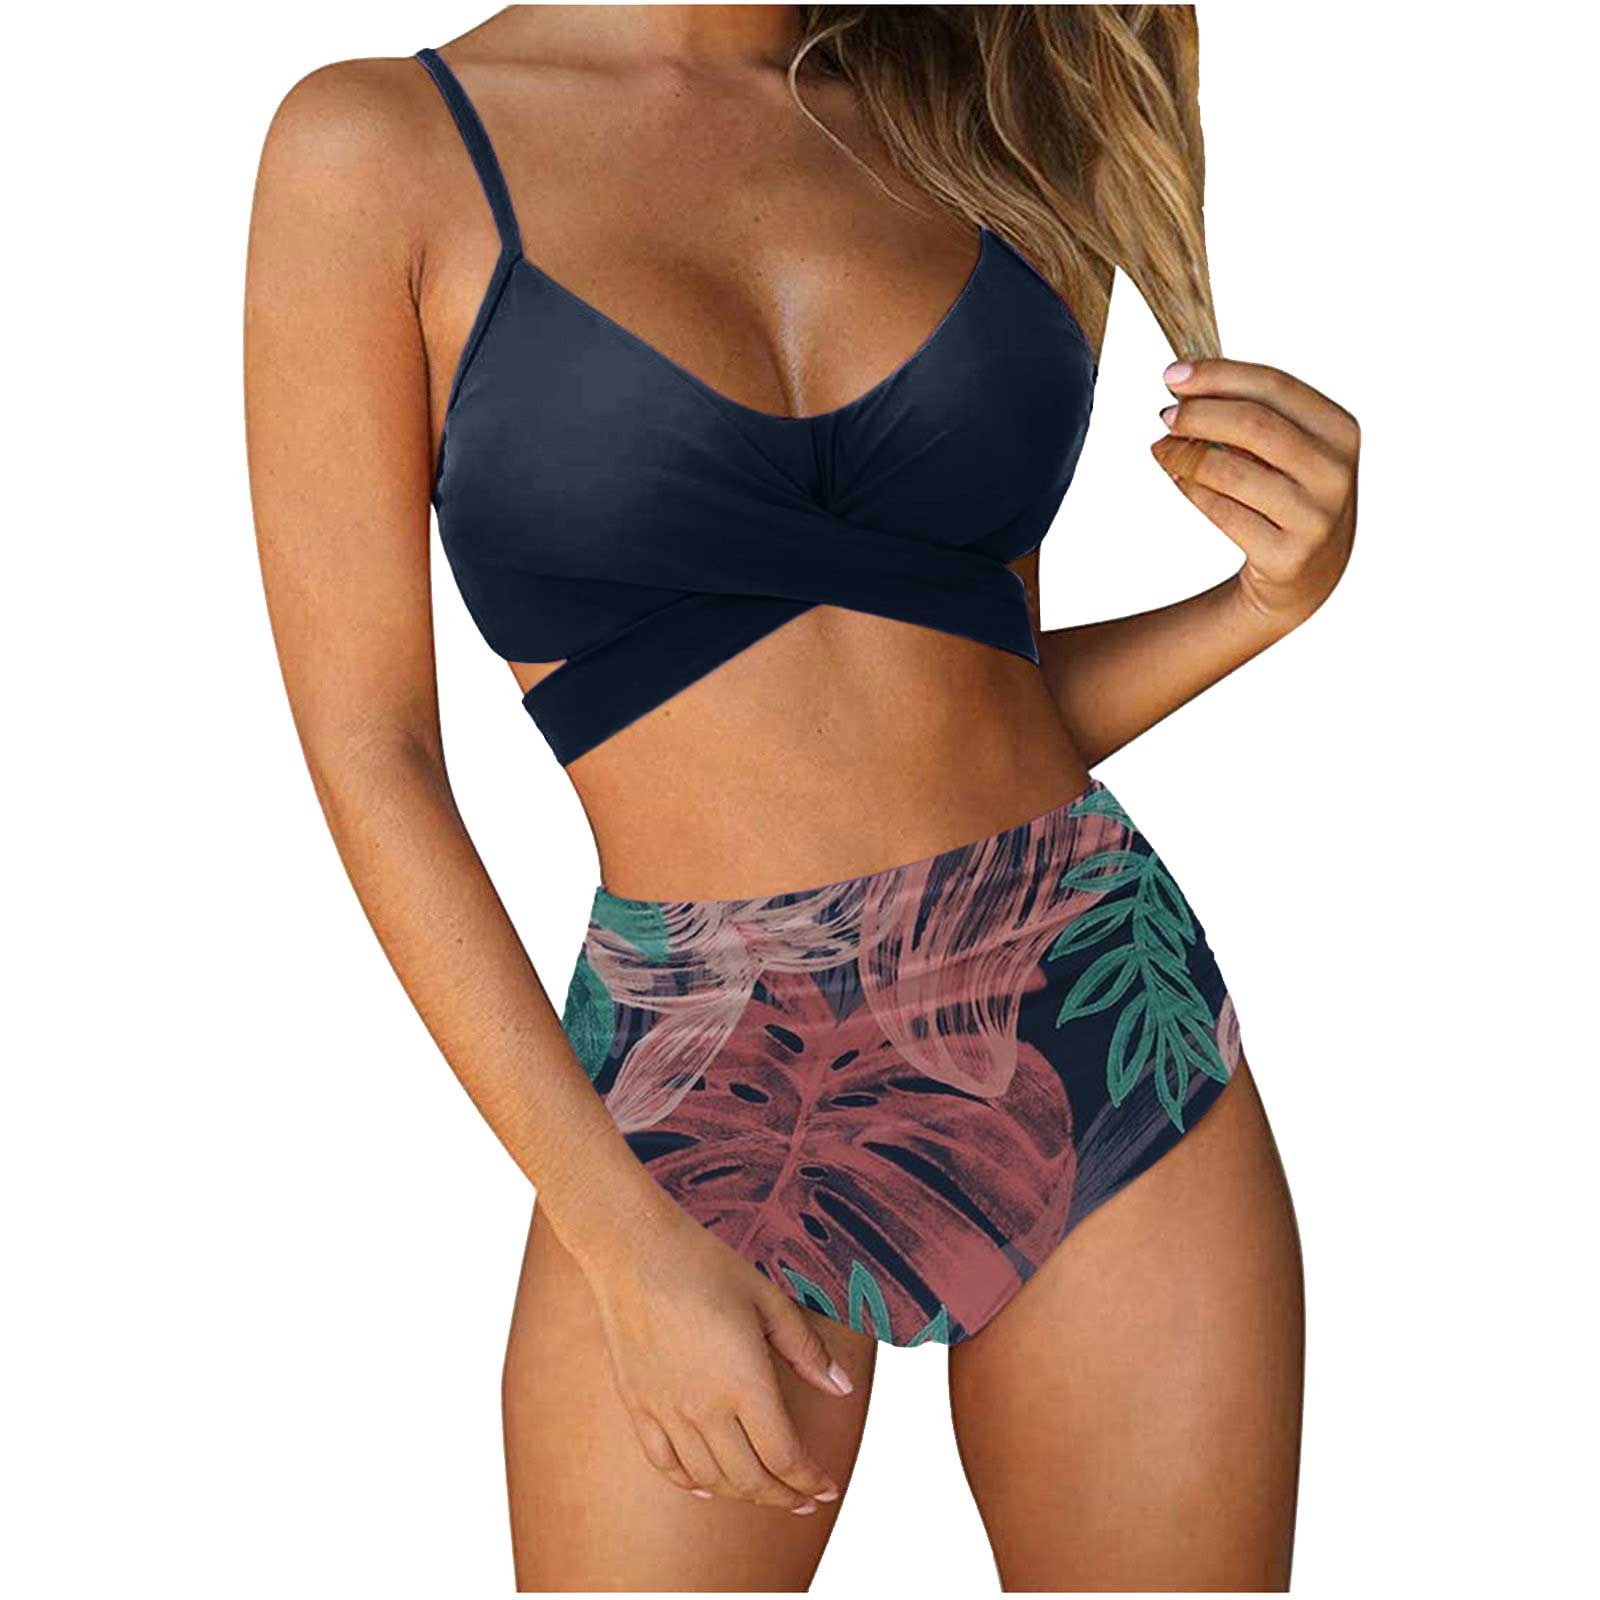 fvwitlyh Bikini Sets for Women Super Soft Swim Vest Push Up